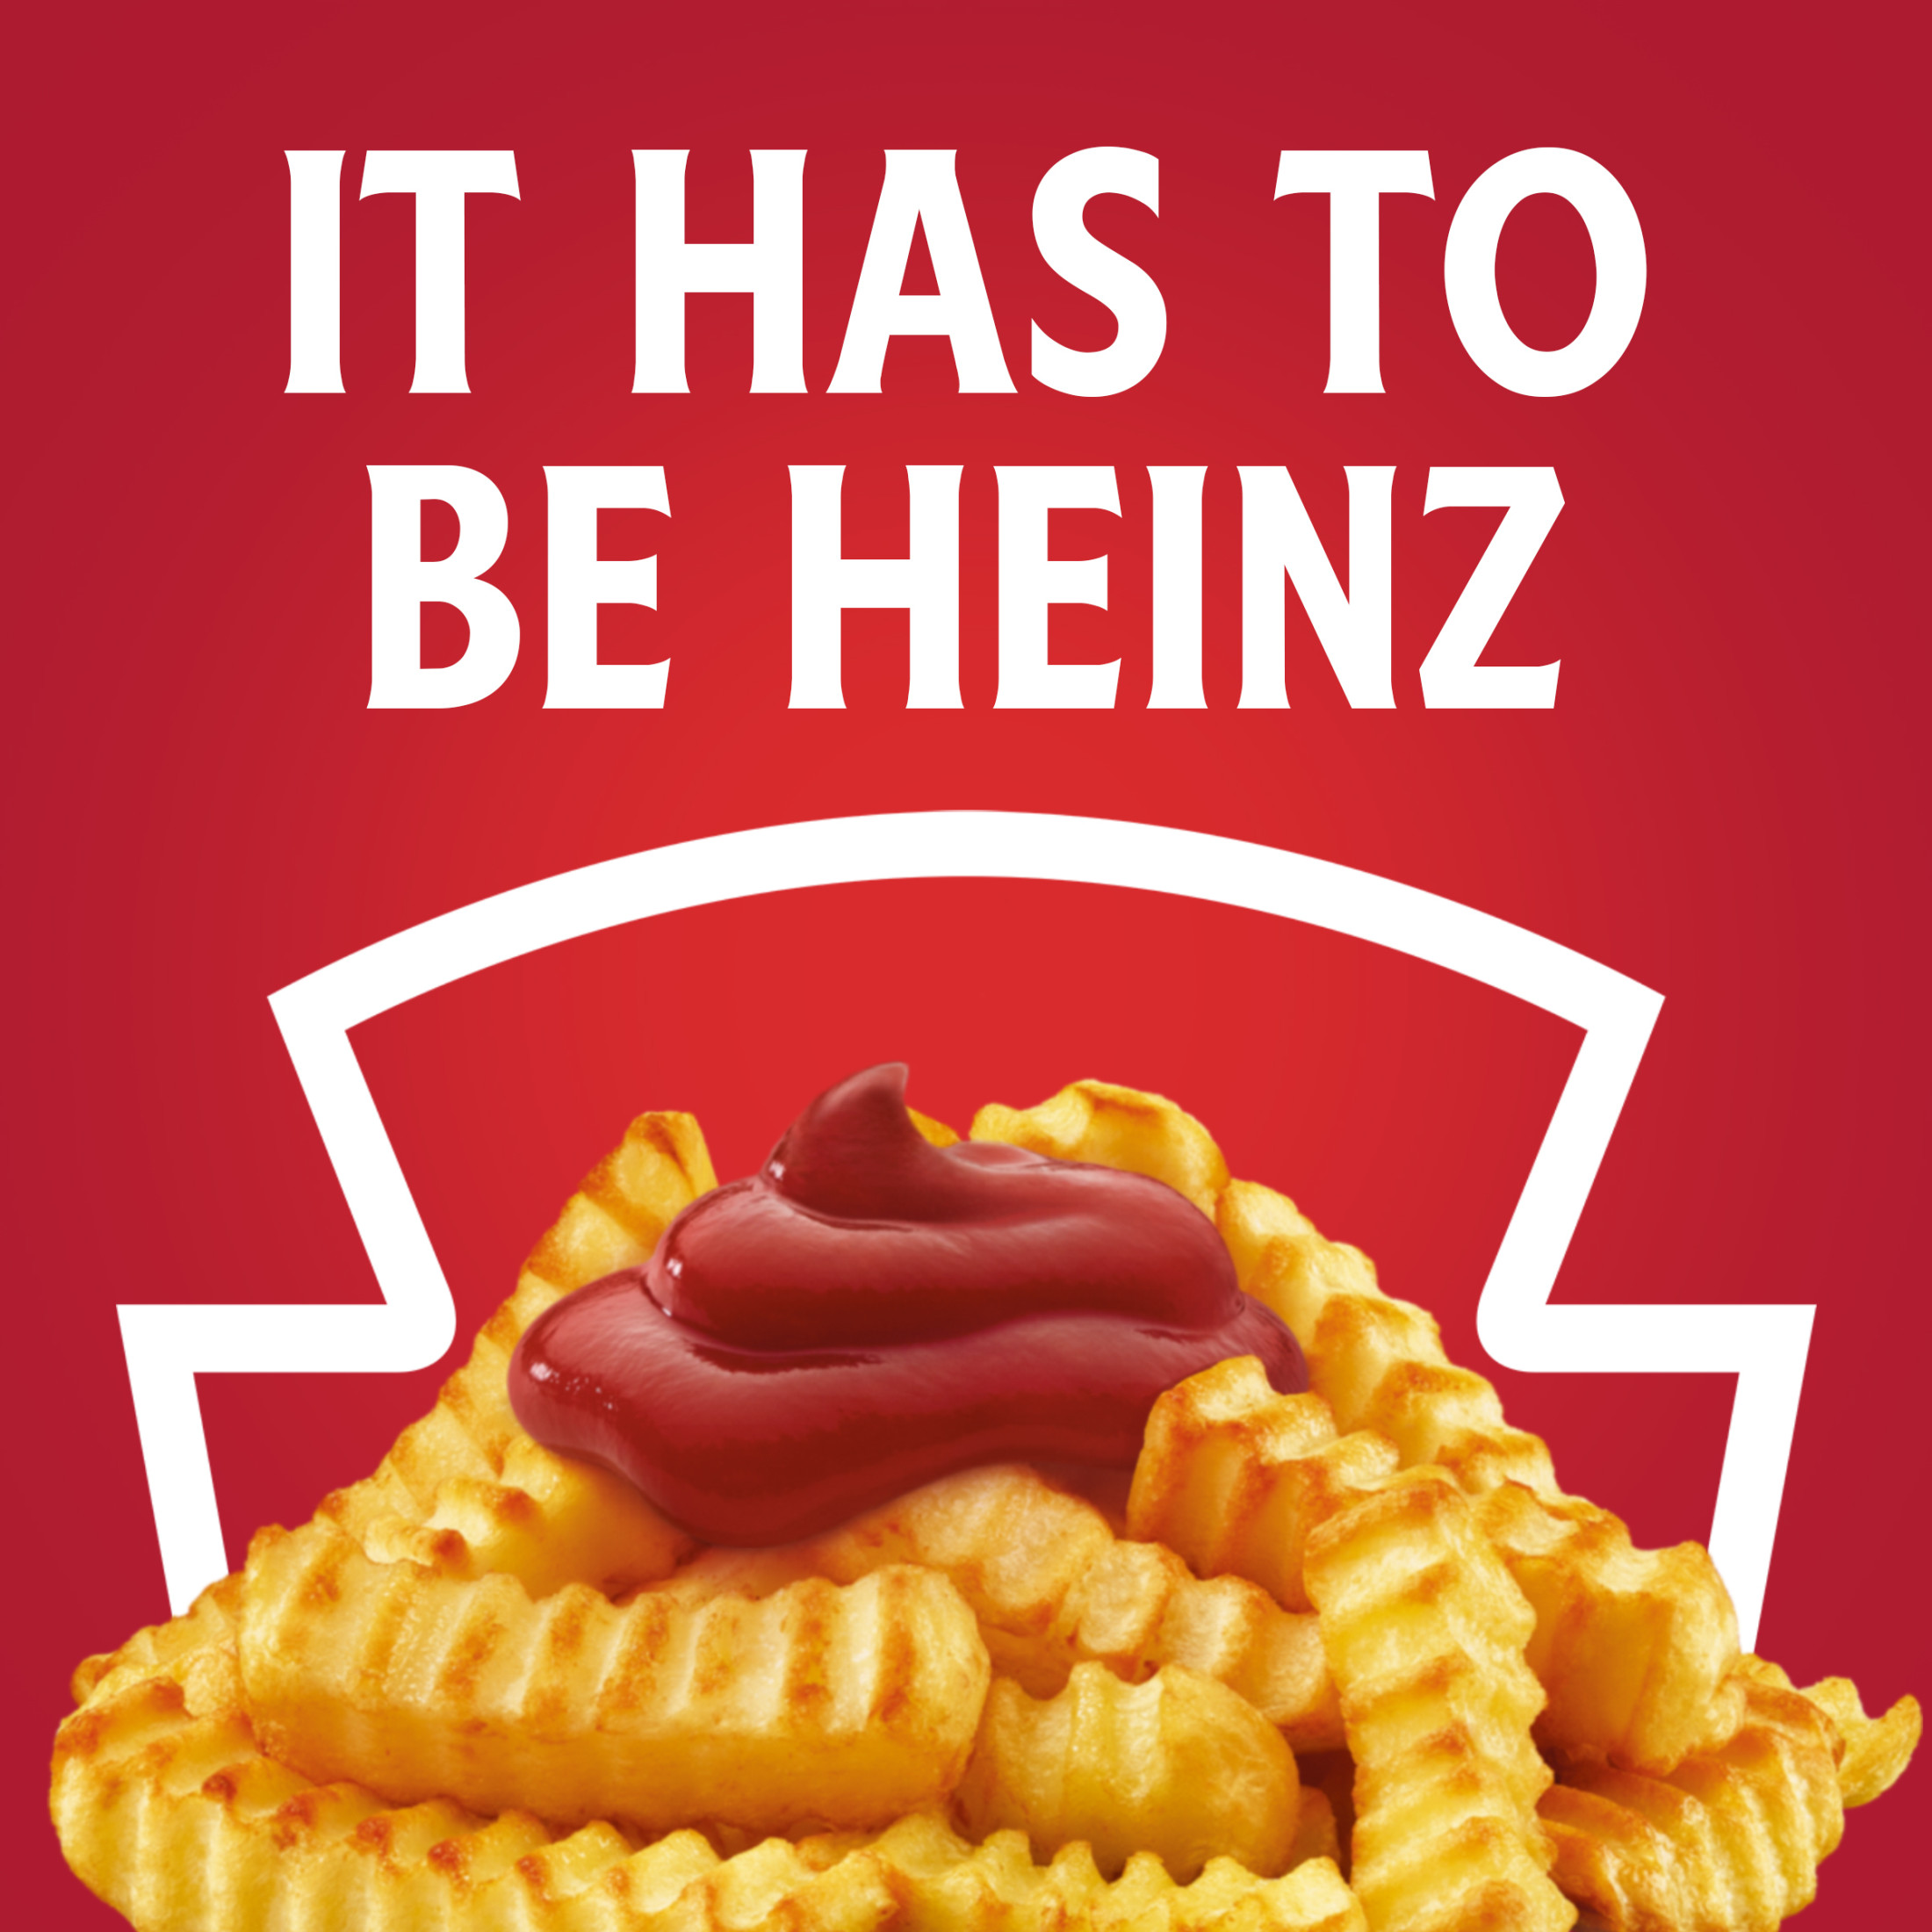 Heinz Tomato Ketchup, 32 oz Bottle - image 7 of 15